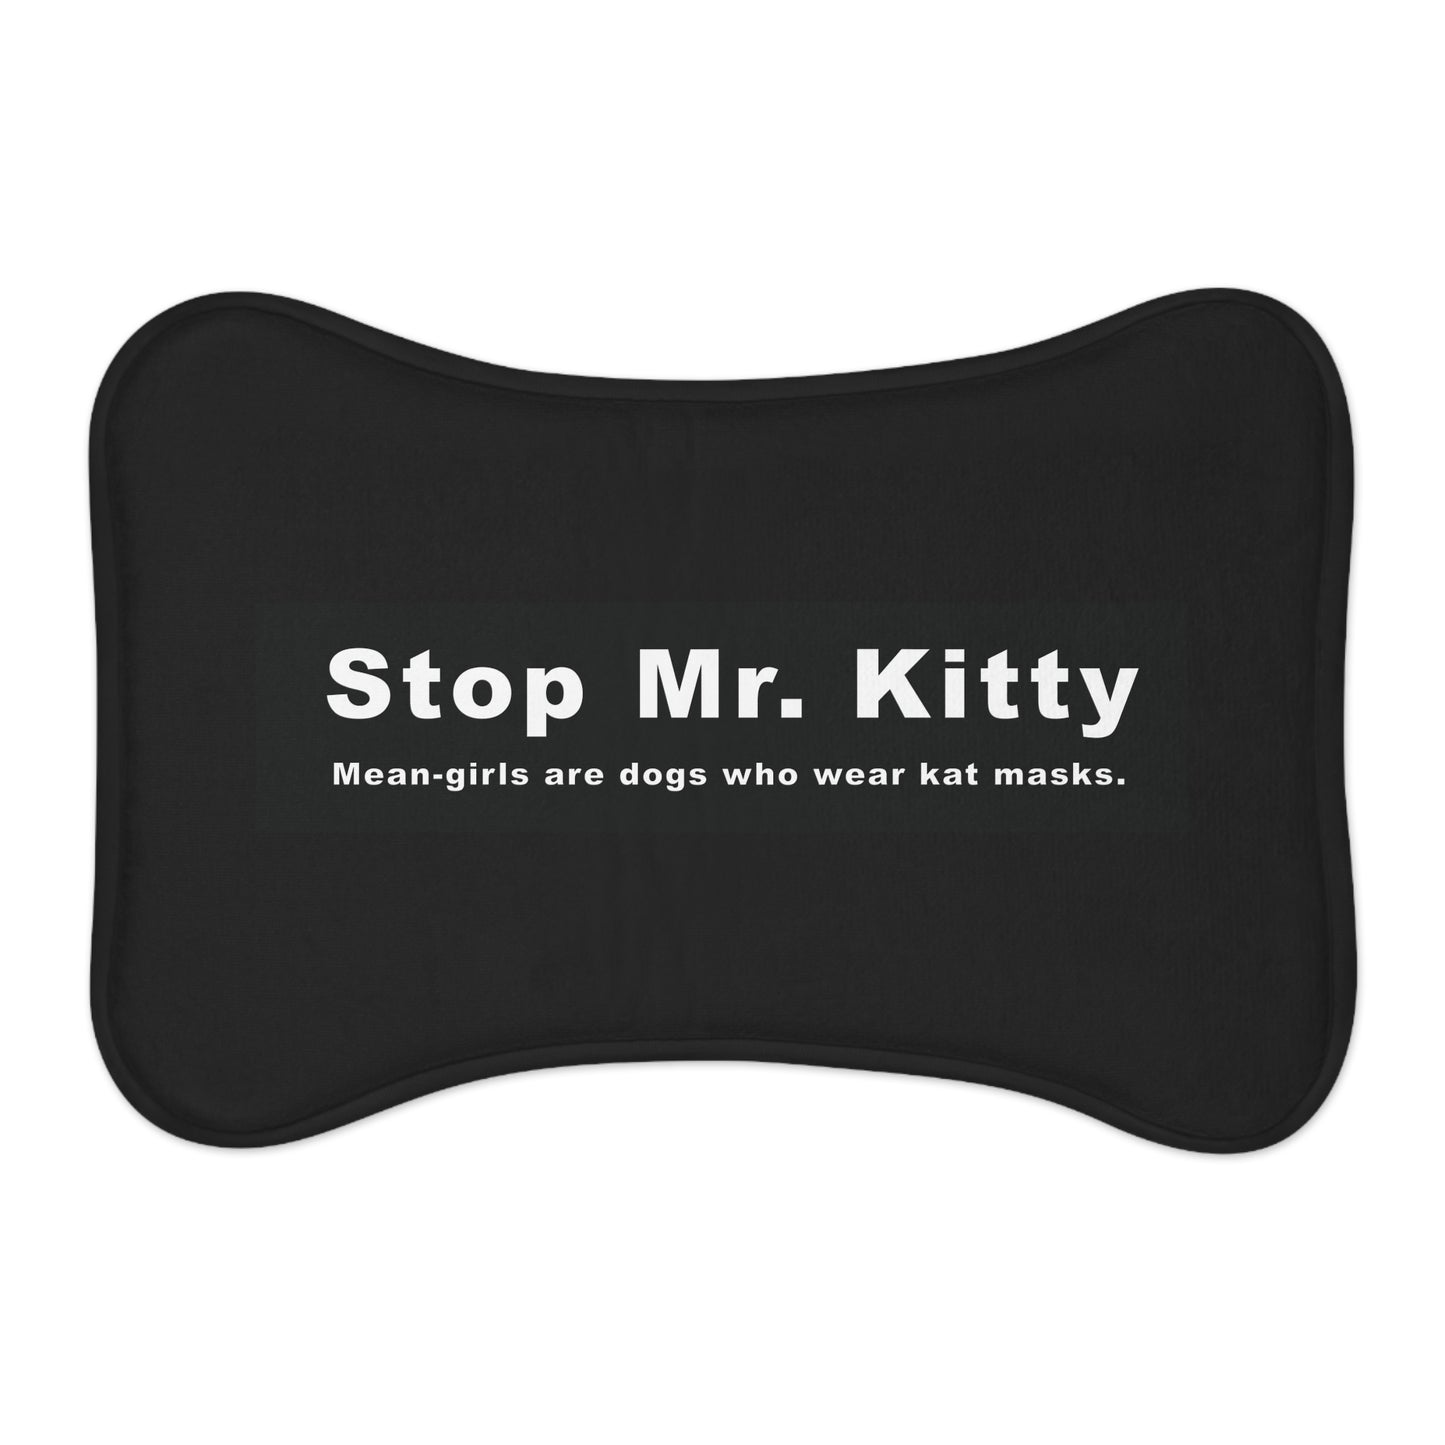 The Stop Mr. Kitty Pet Feeding Mat